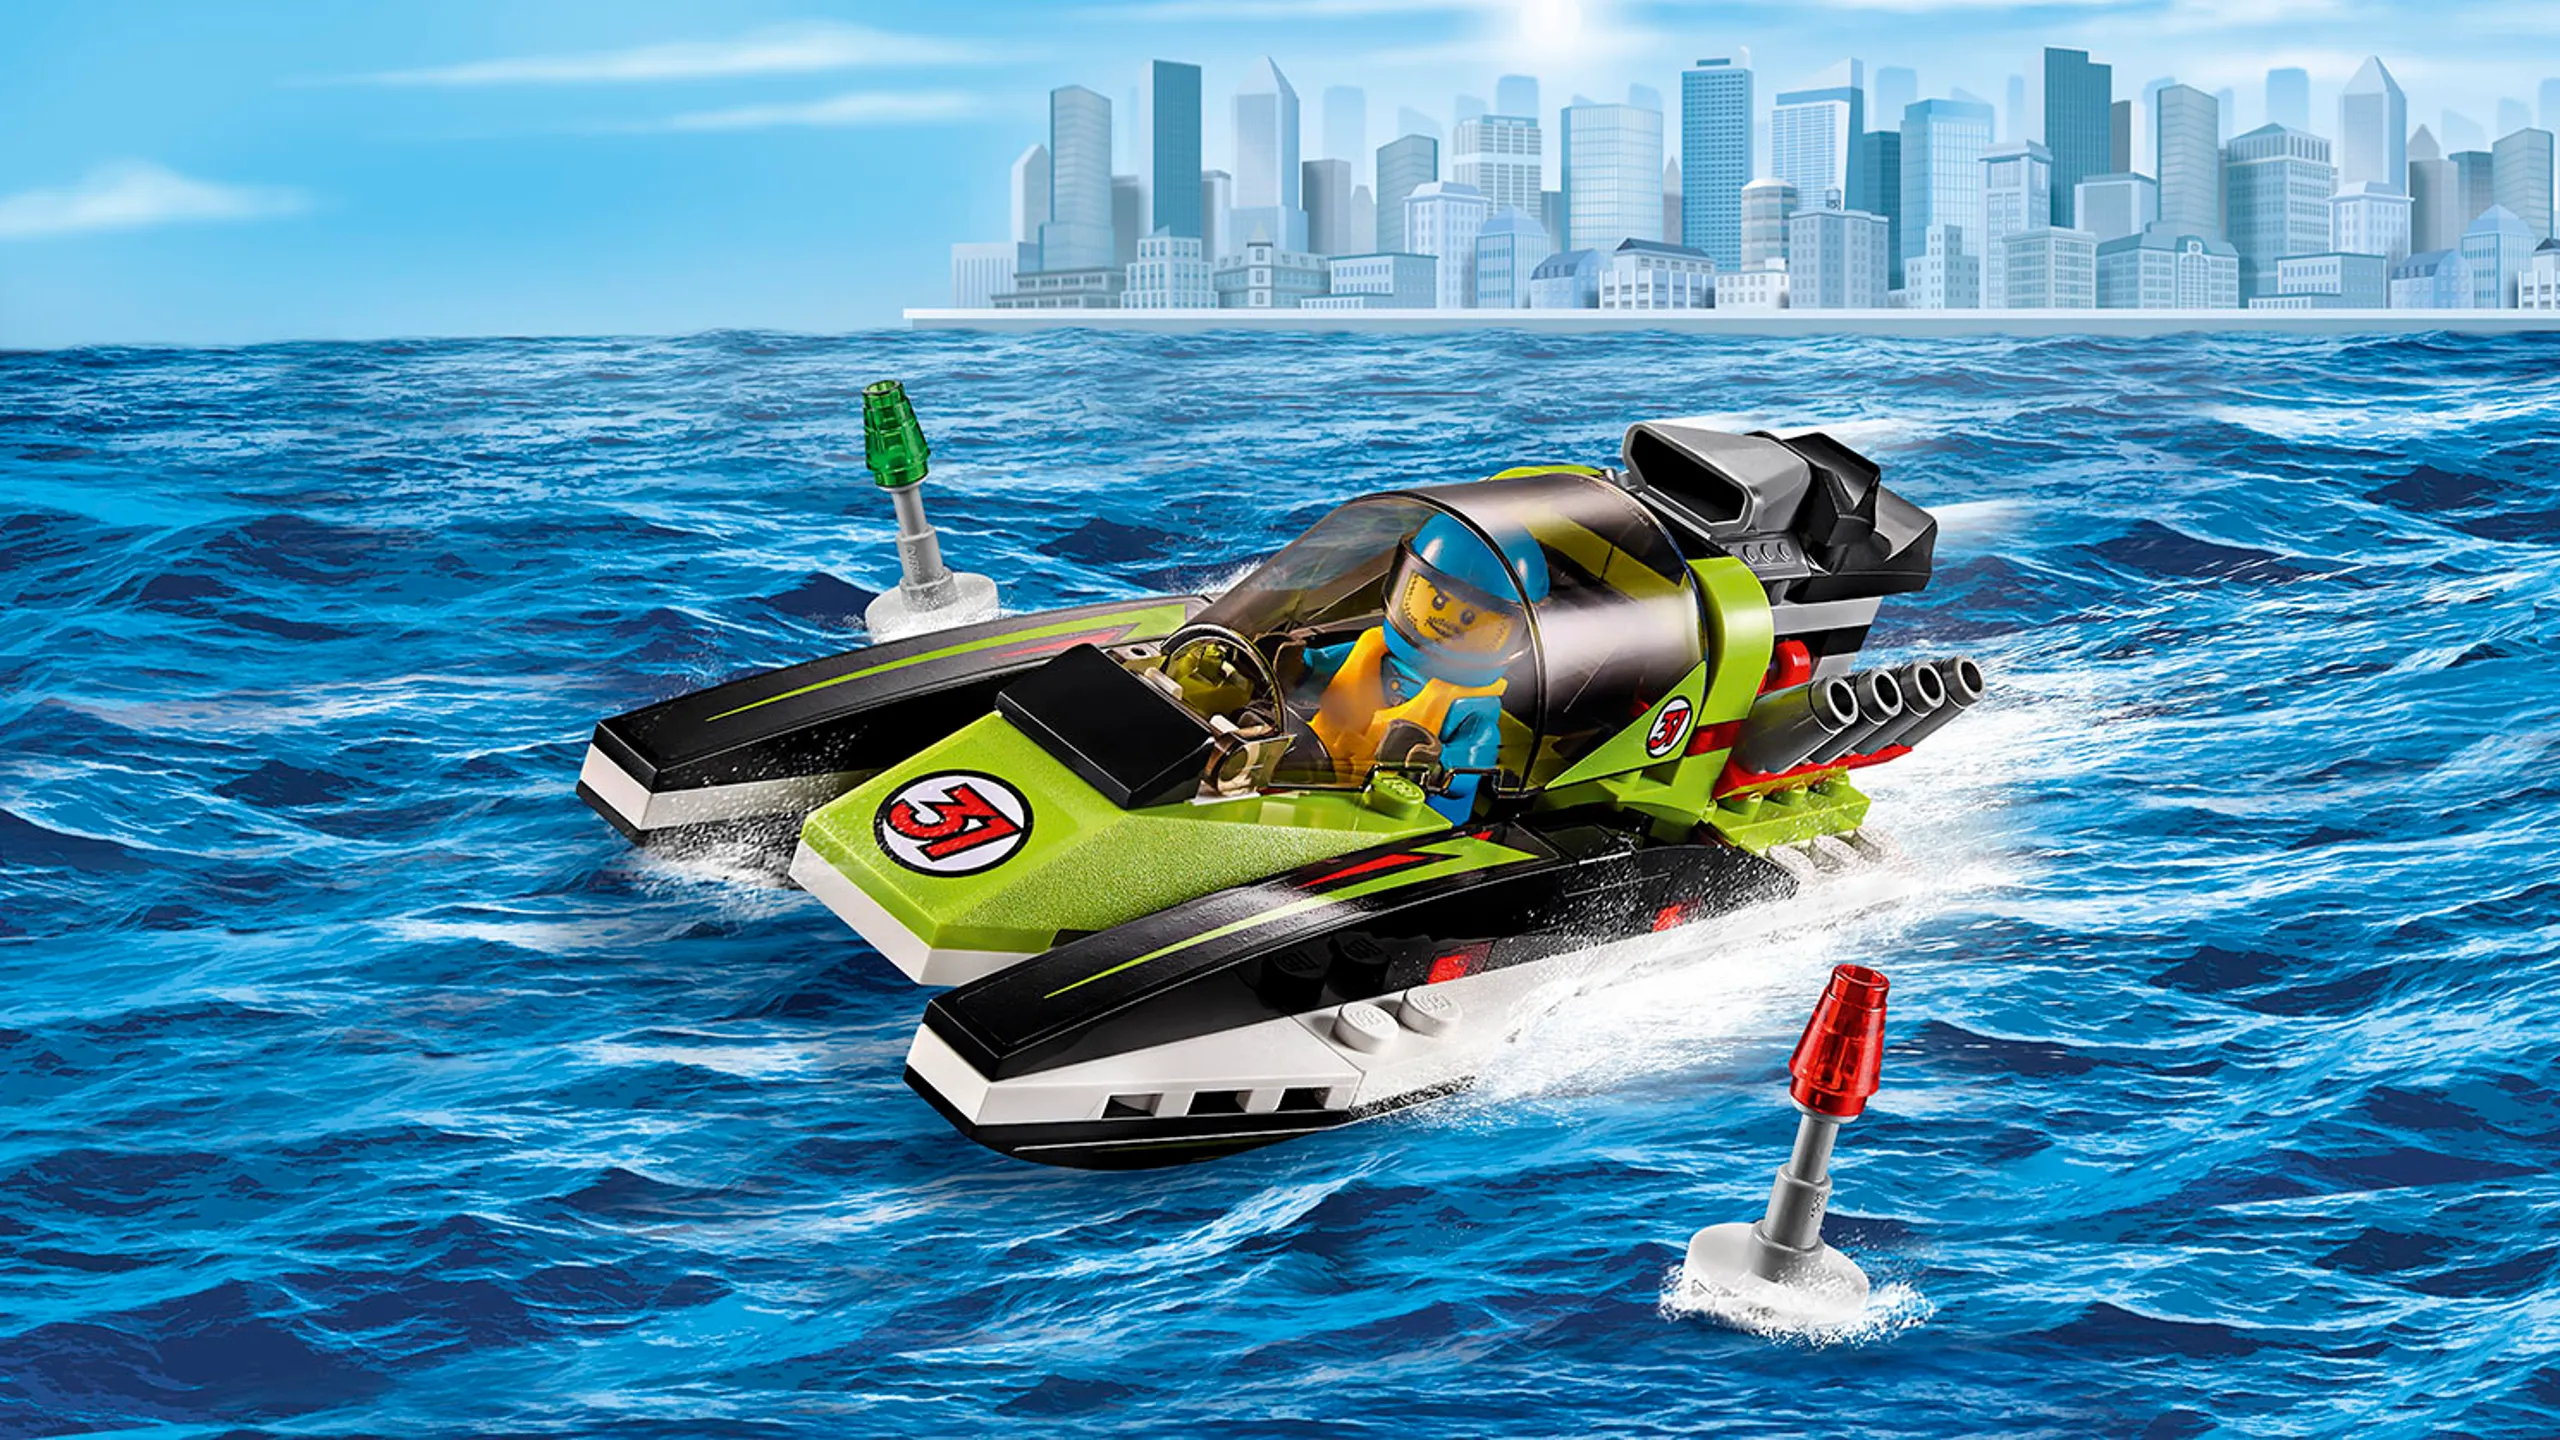 LEGO City Great Vehicles green race boat – Race Boat 60114